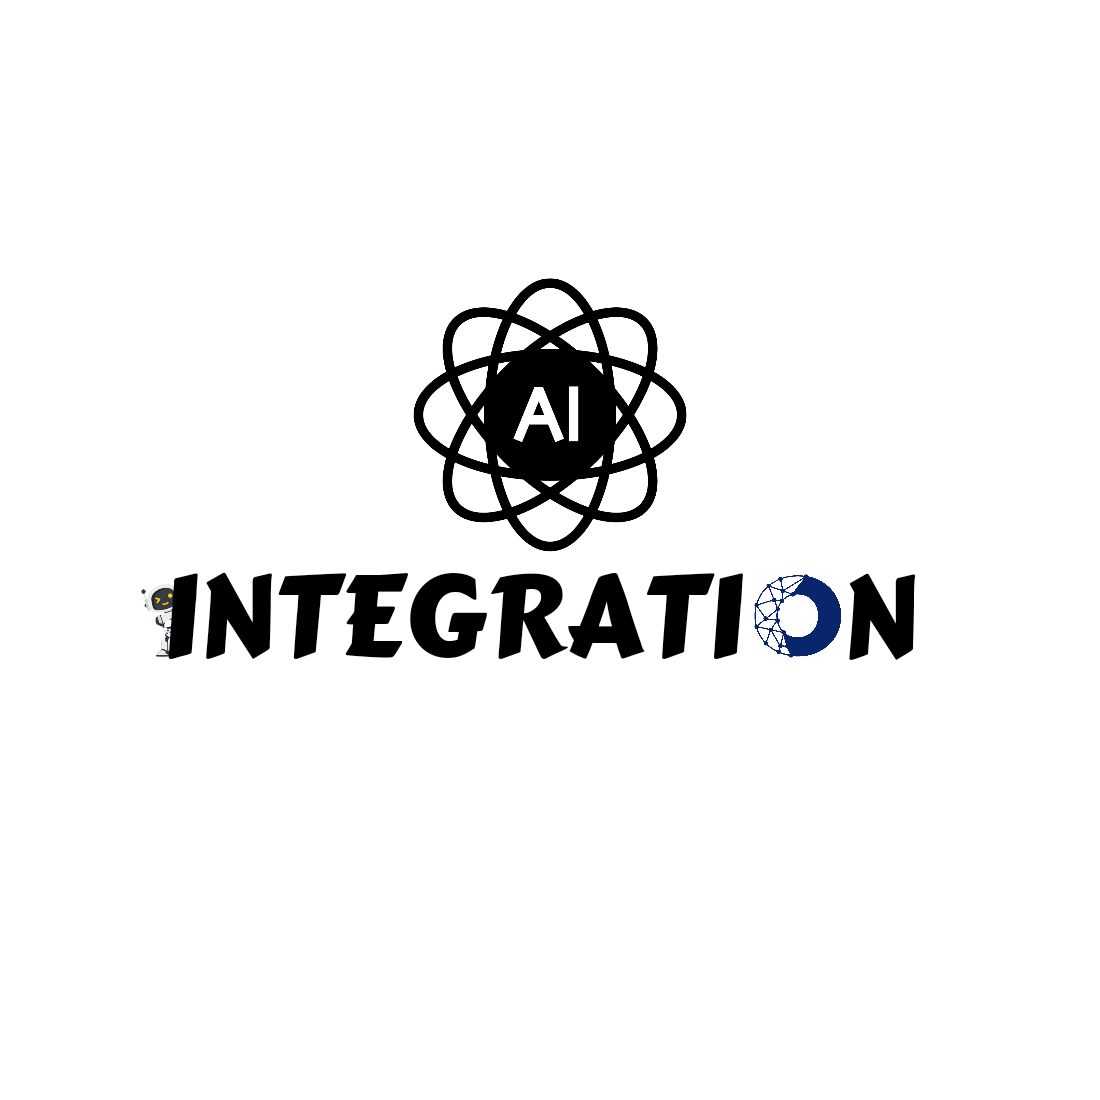 AI Integration preview image.